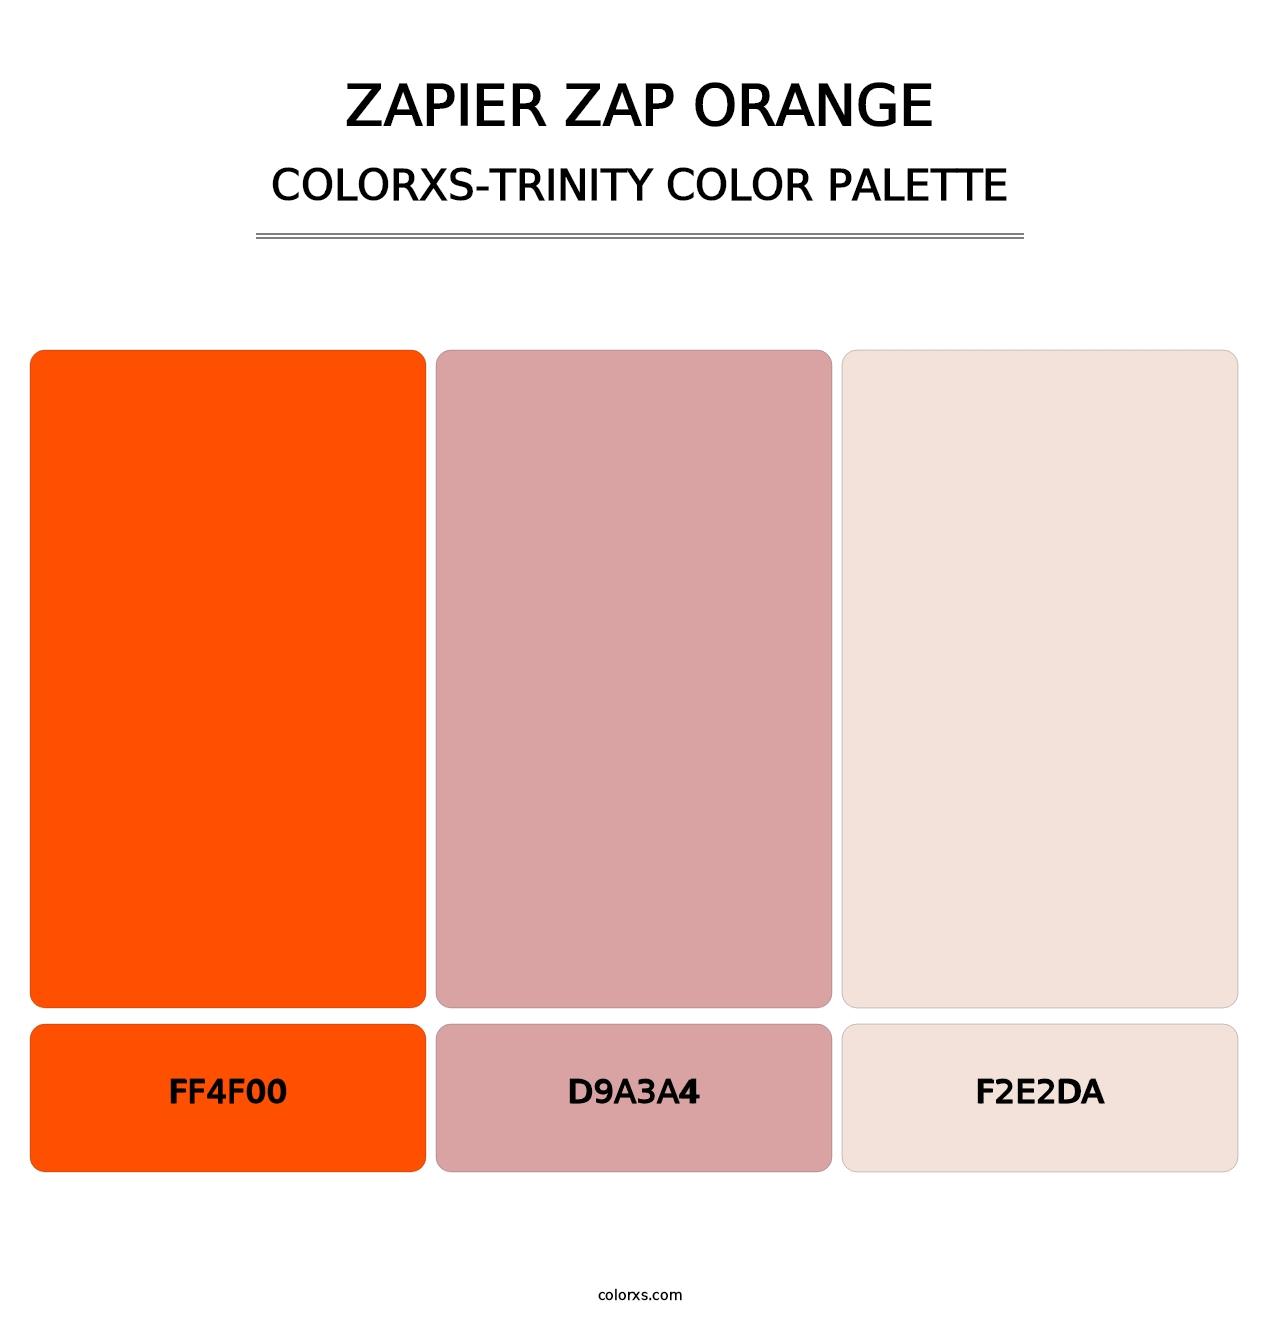 Zapier Zap Orange - Colorxs Trinity Palette